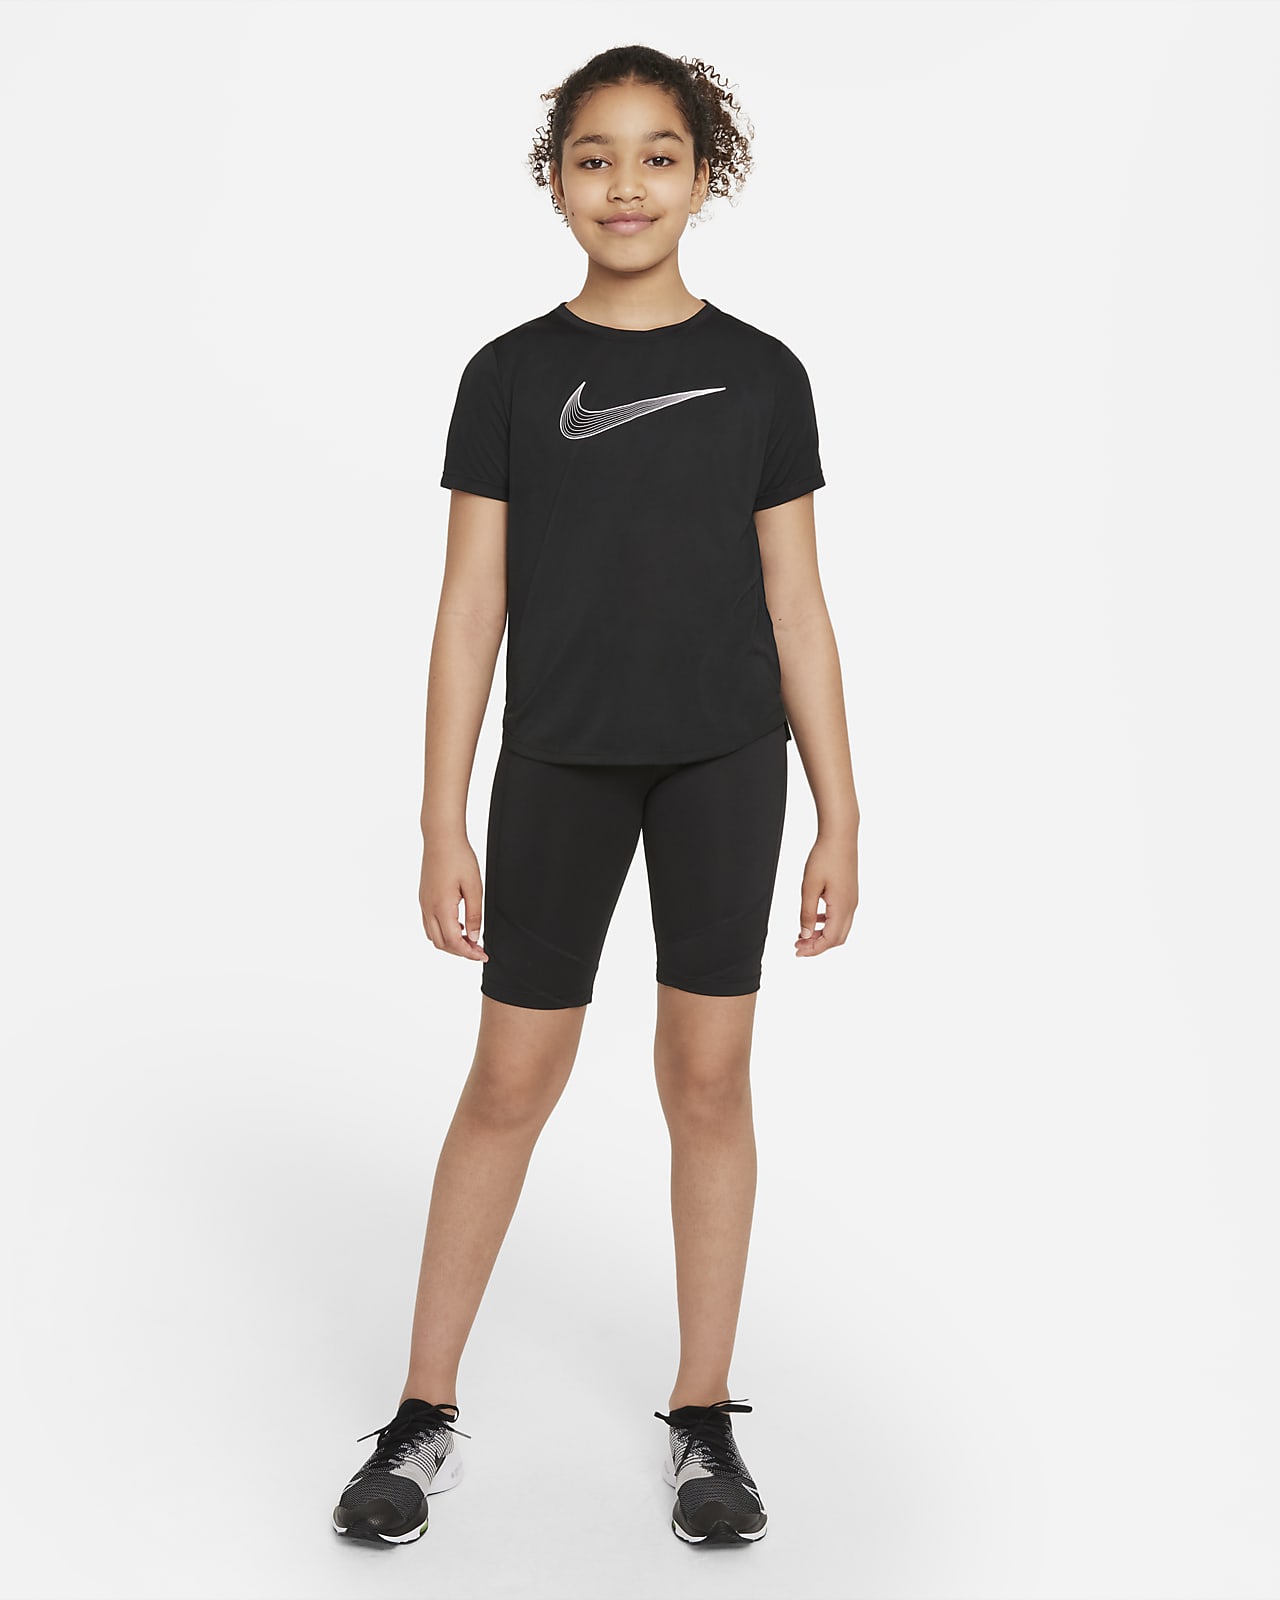 Kids\' Big One (Girls\') Training Dri-FIT Nike Top. Short-Sleeve